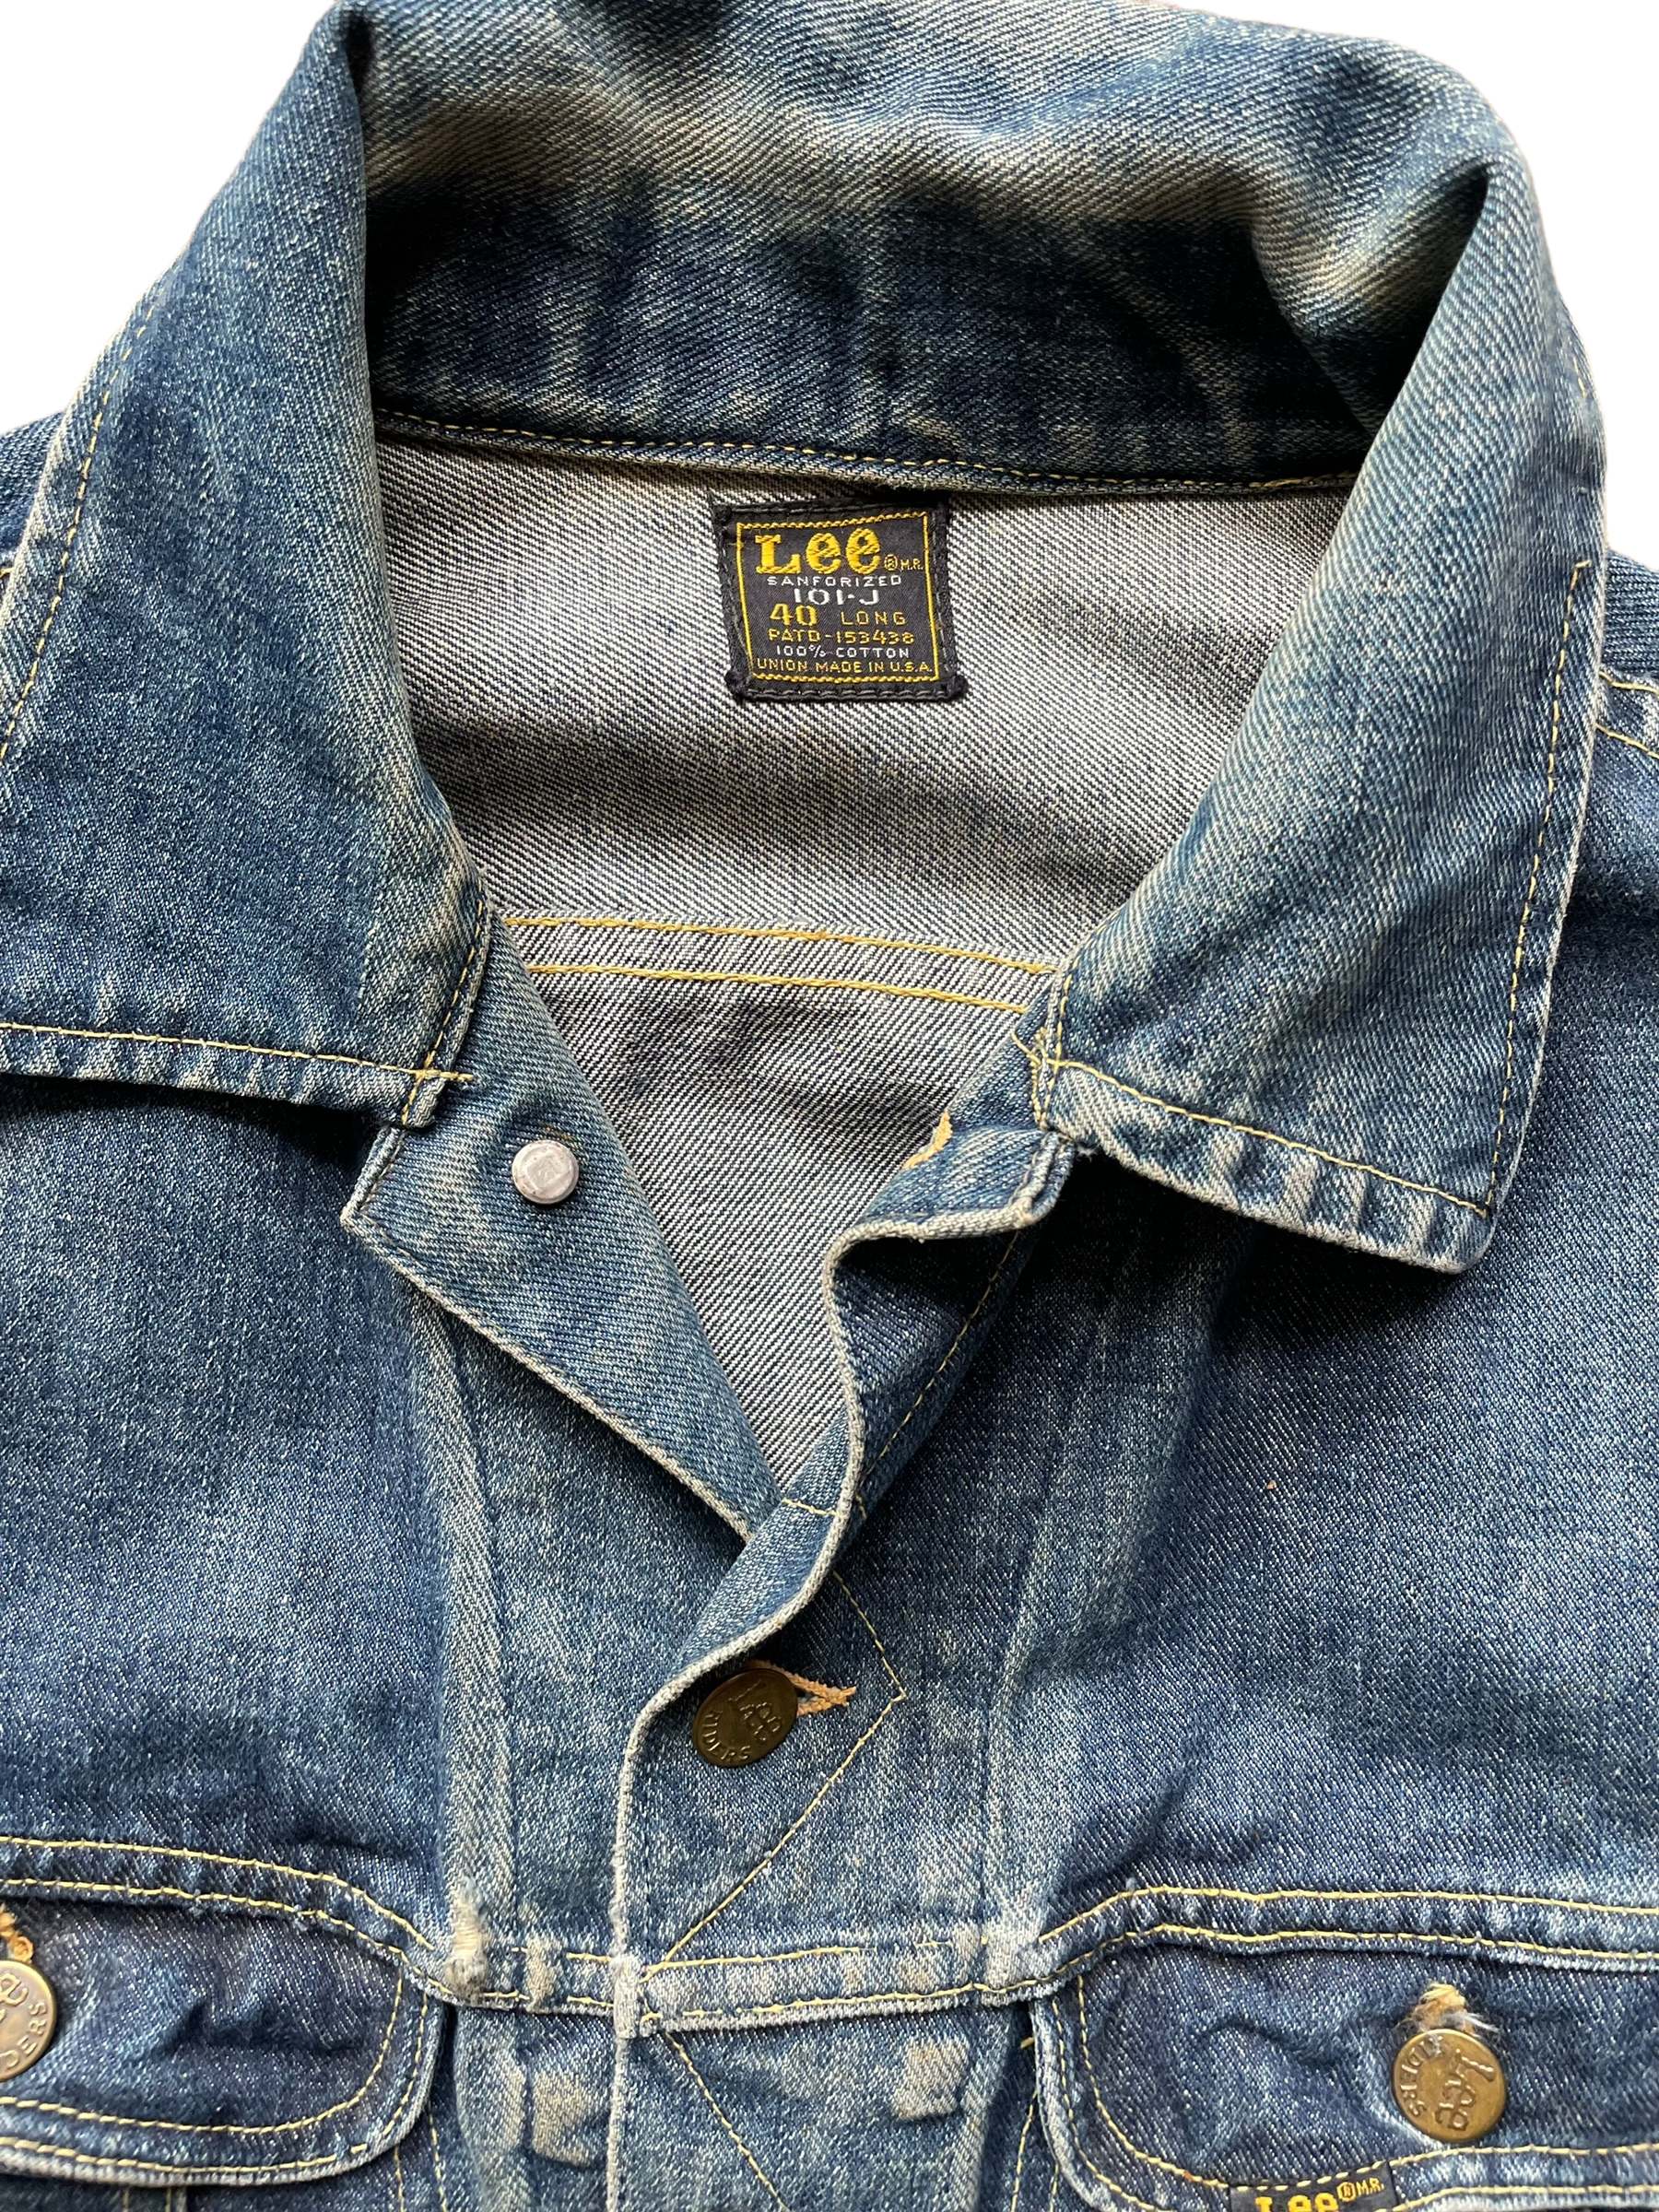 Vintage 70's Lee 101-J Denim Jacket Front view of collar and label